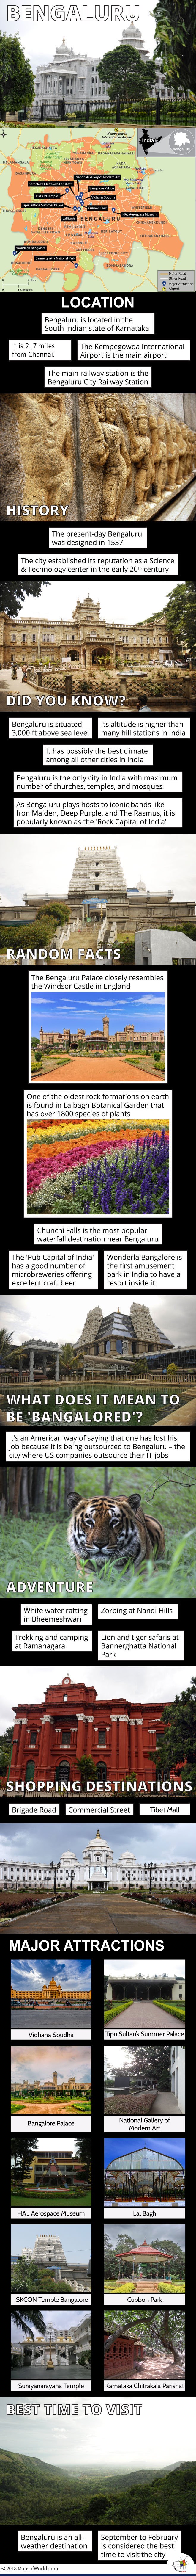 Infographic Depicting Bengaluru Tourist Attractions